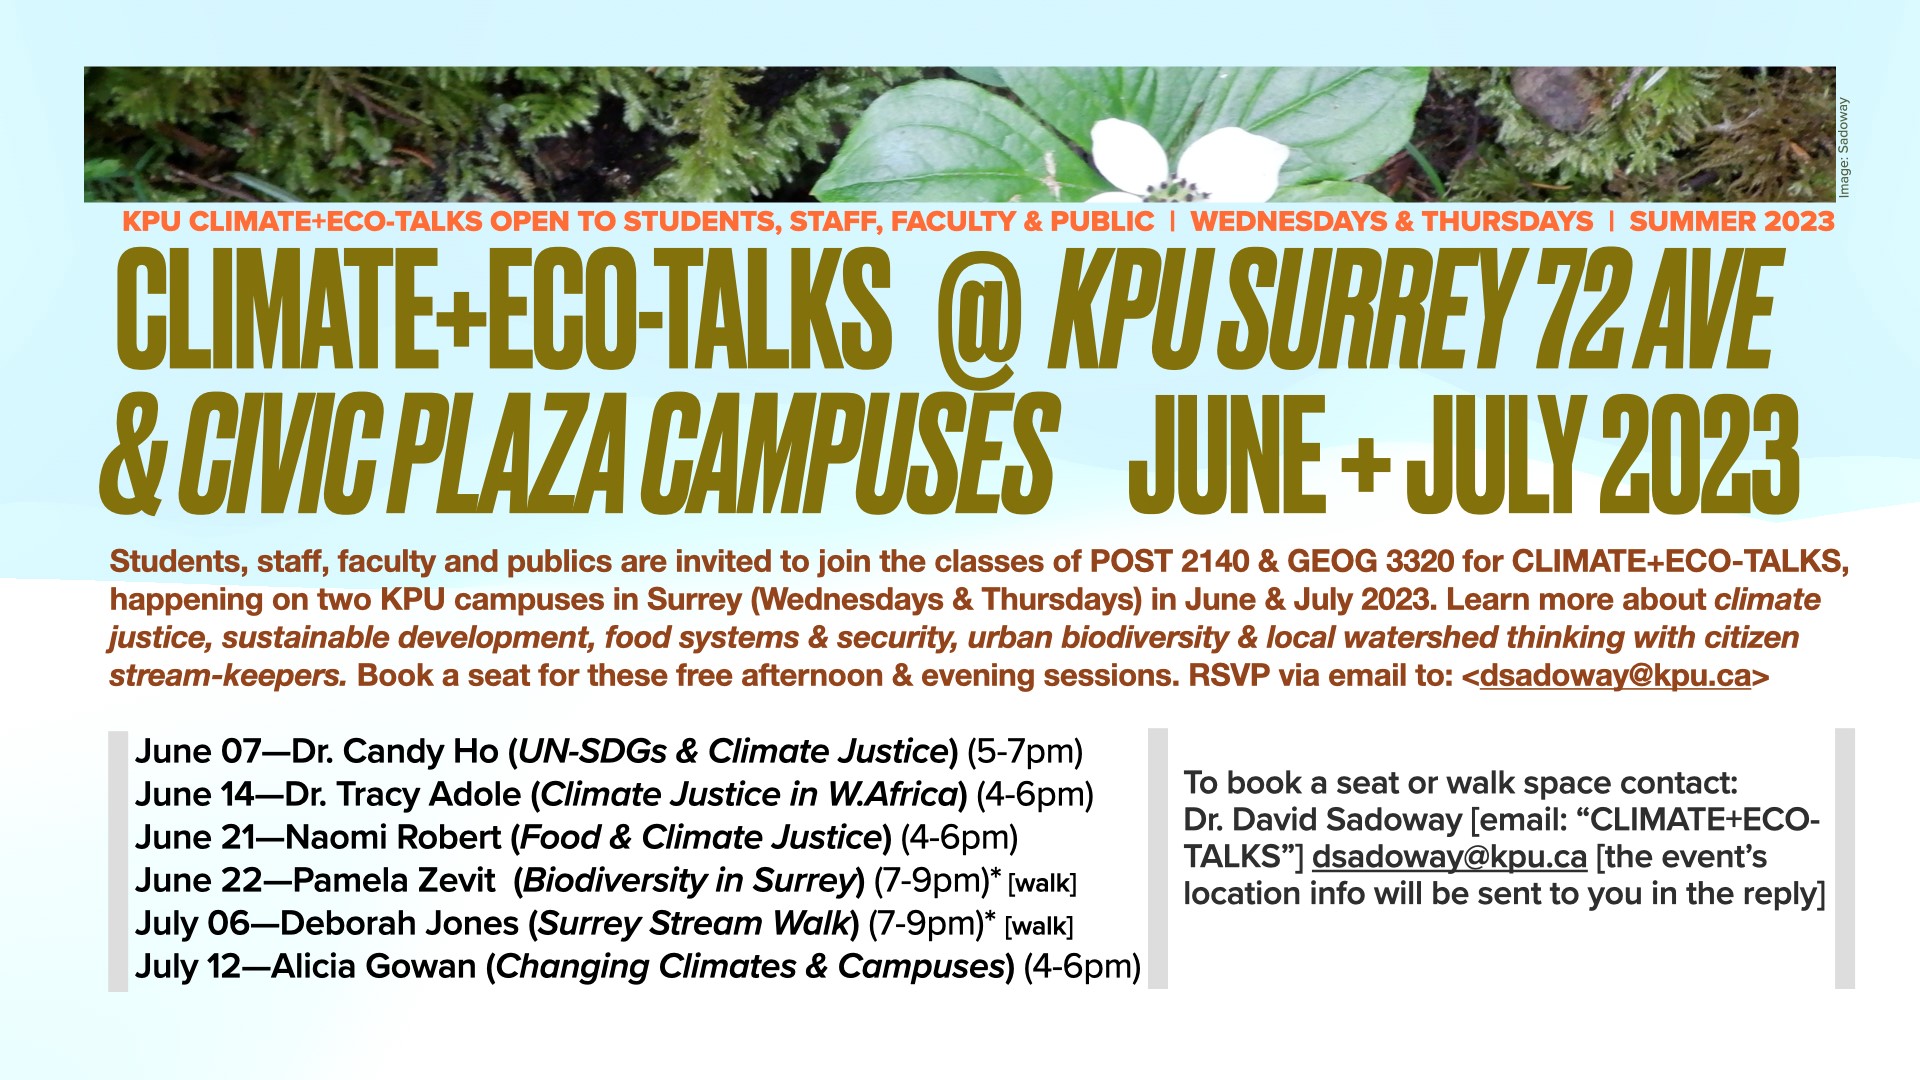 CLIMATE+ECO-TALKS @ KPU Surrey 72 Ave & Civic Plaza Campuses June+July 2023